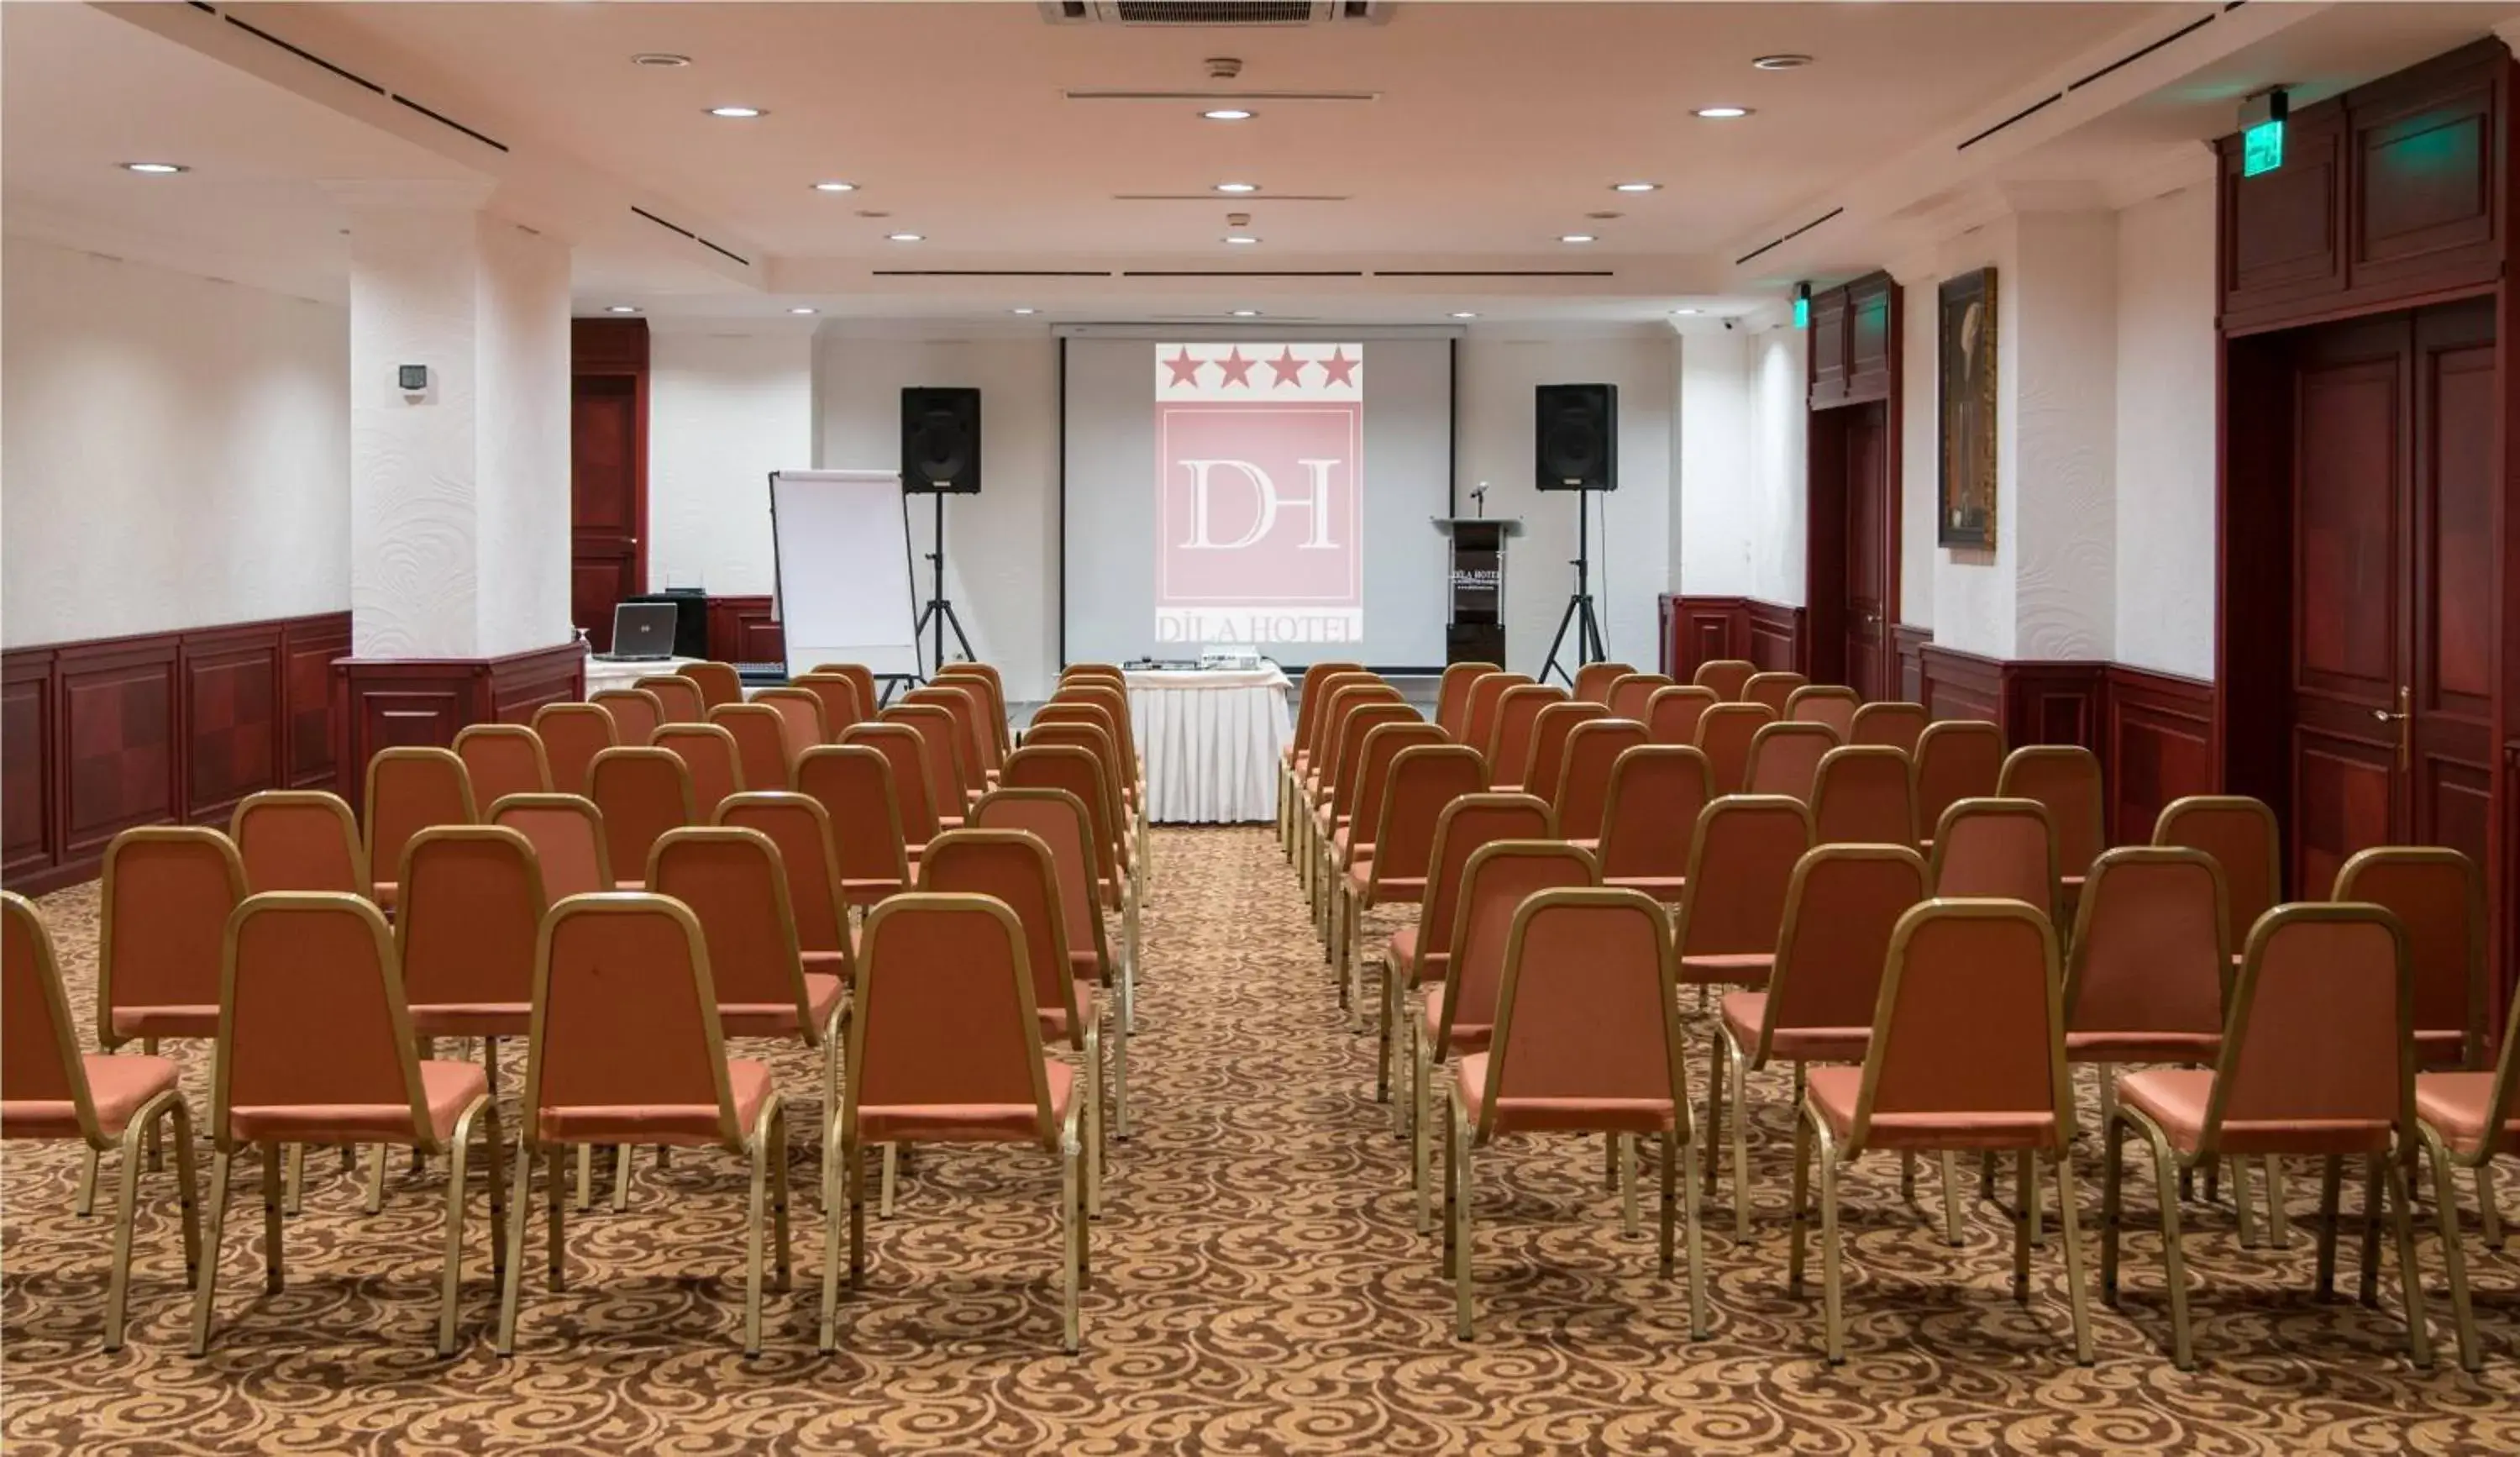 Banquet/Function facilities in Dila Hotel